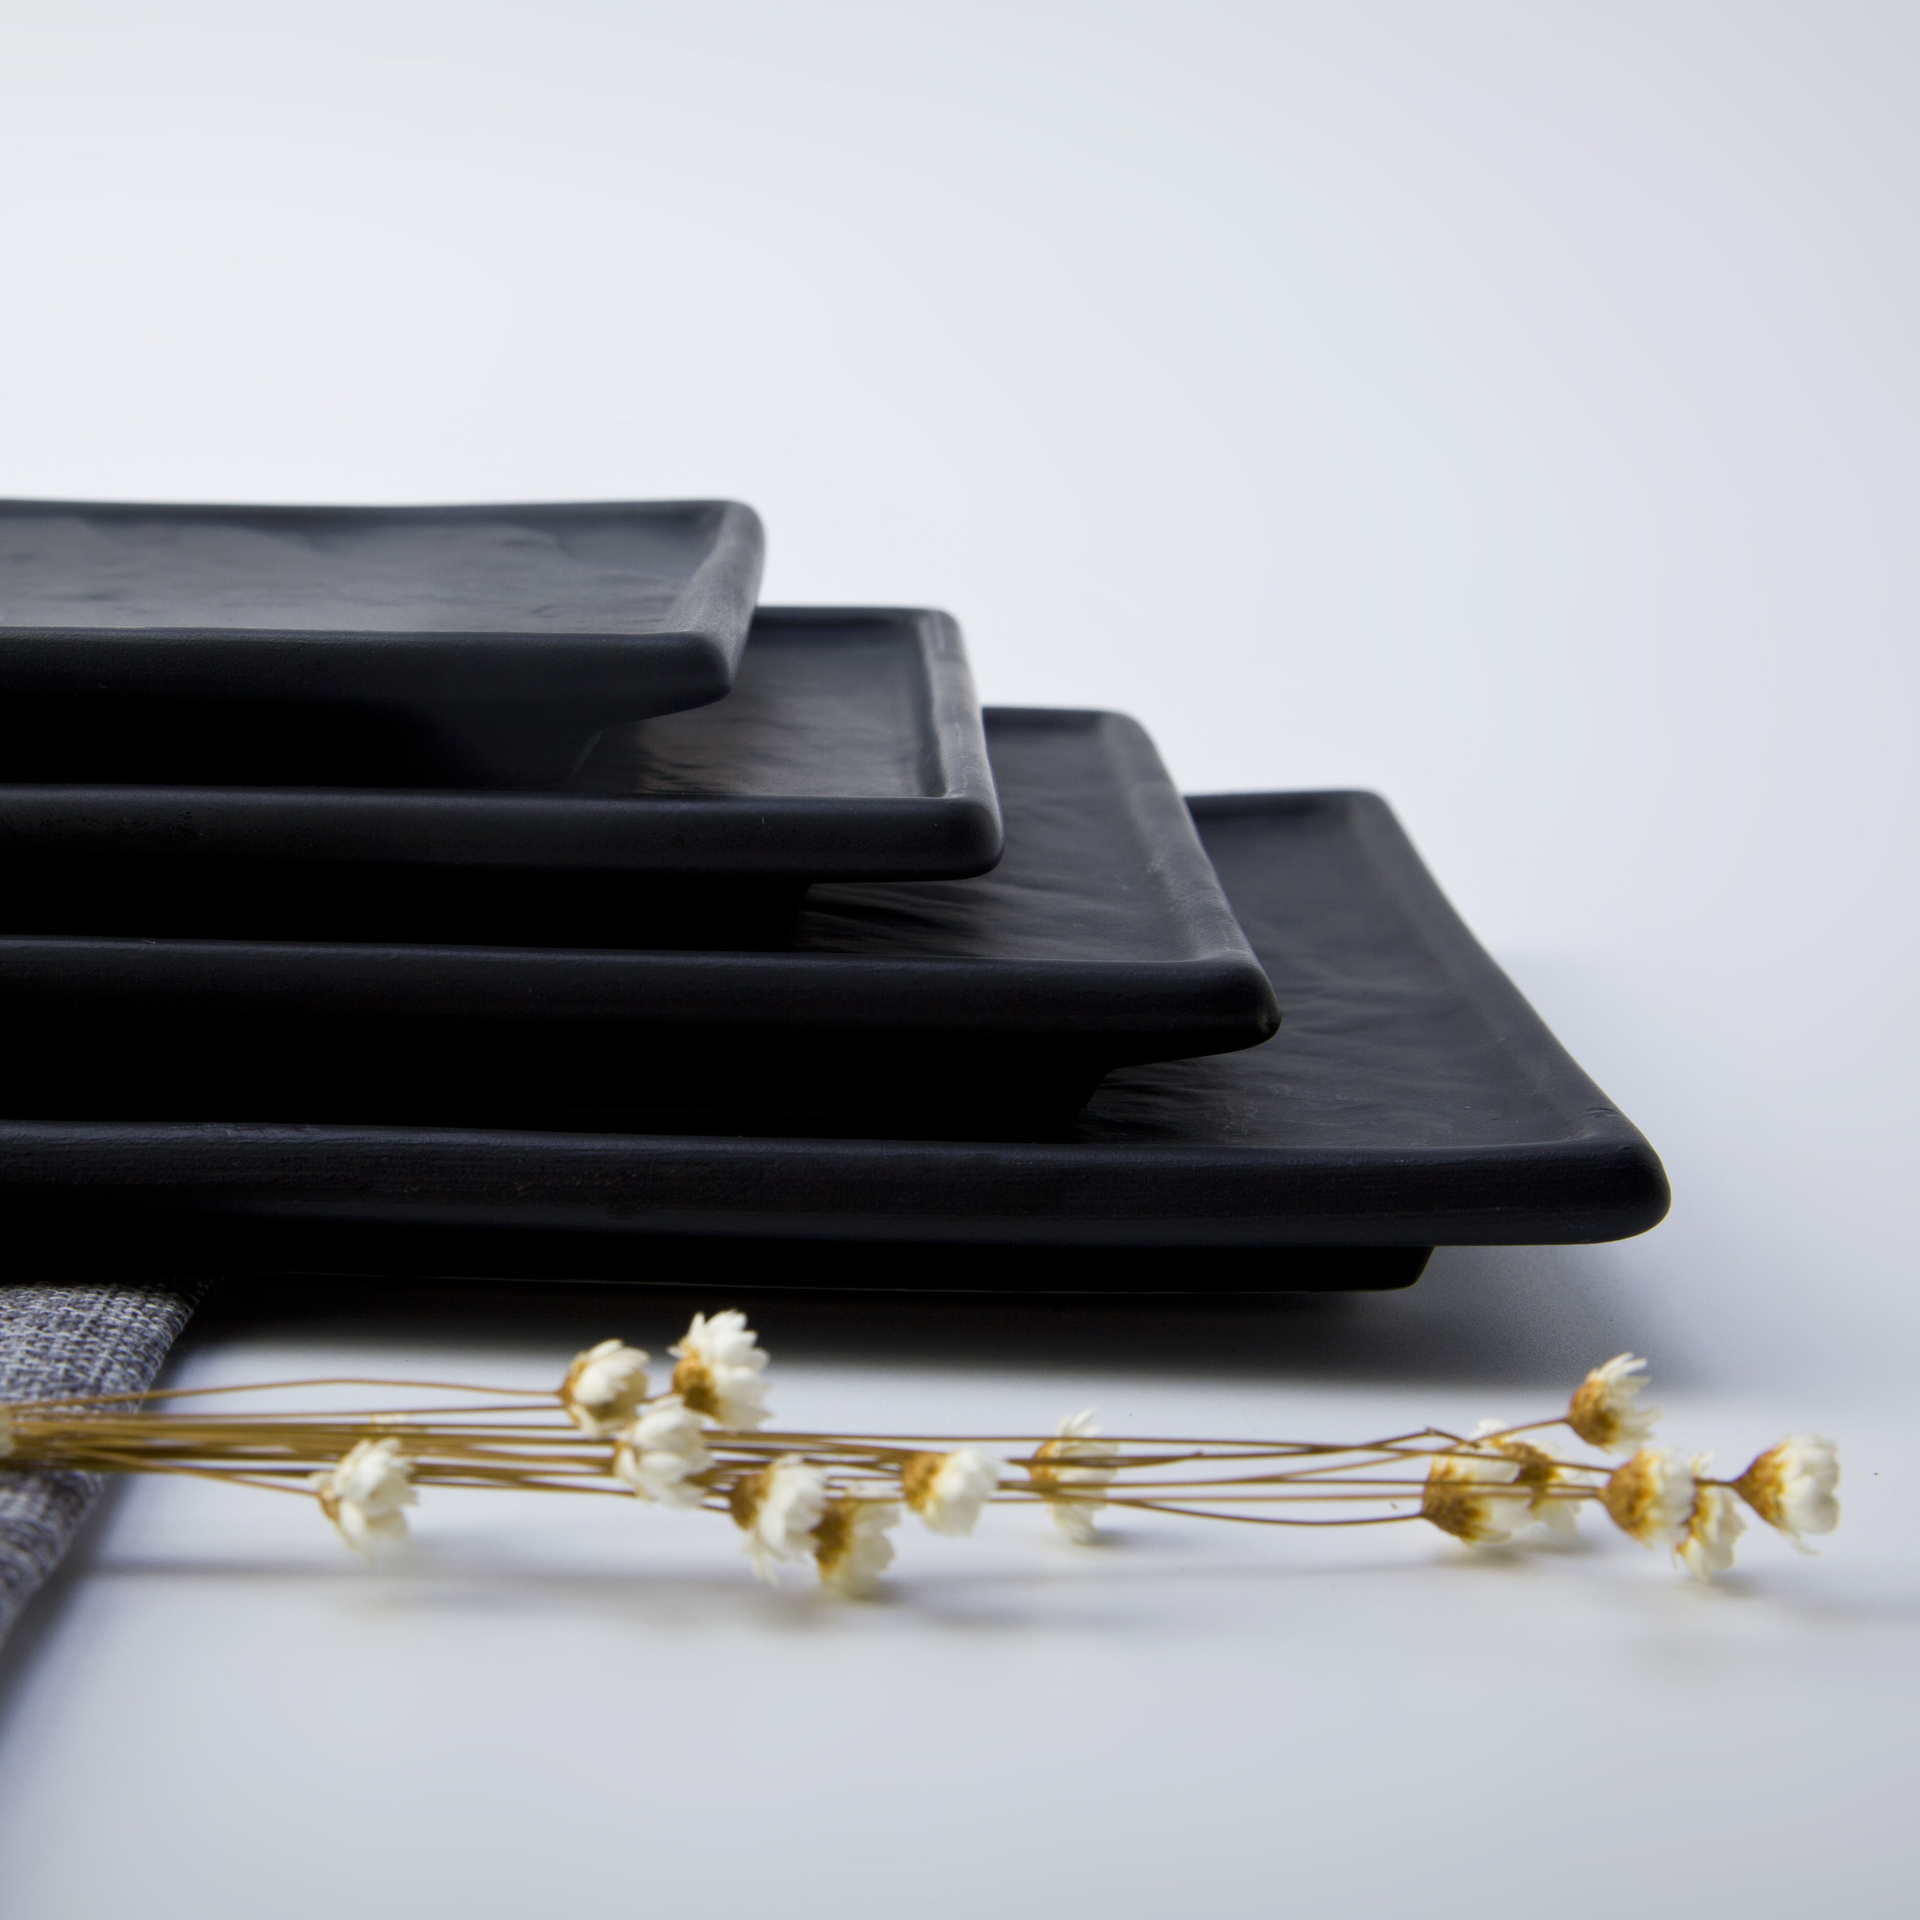 Restaurant Ceramic Black Plate, Good Quality Hotel Japanese Sushi Serving Set, Rectangular Plate Ceramic/